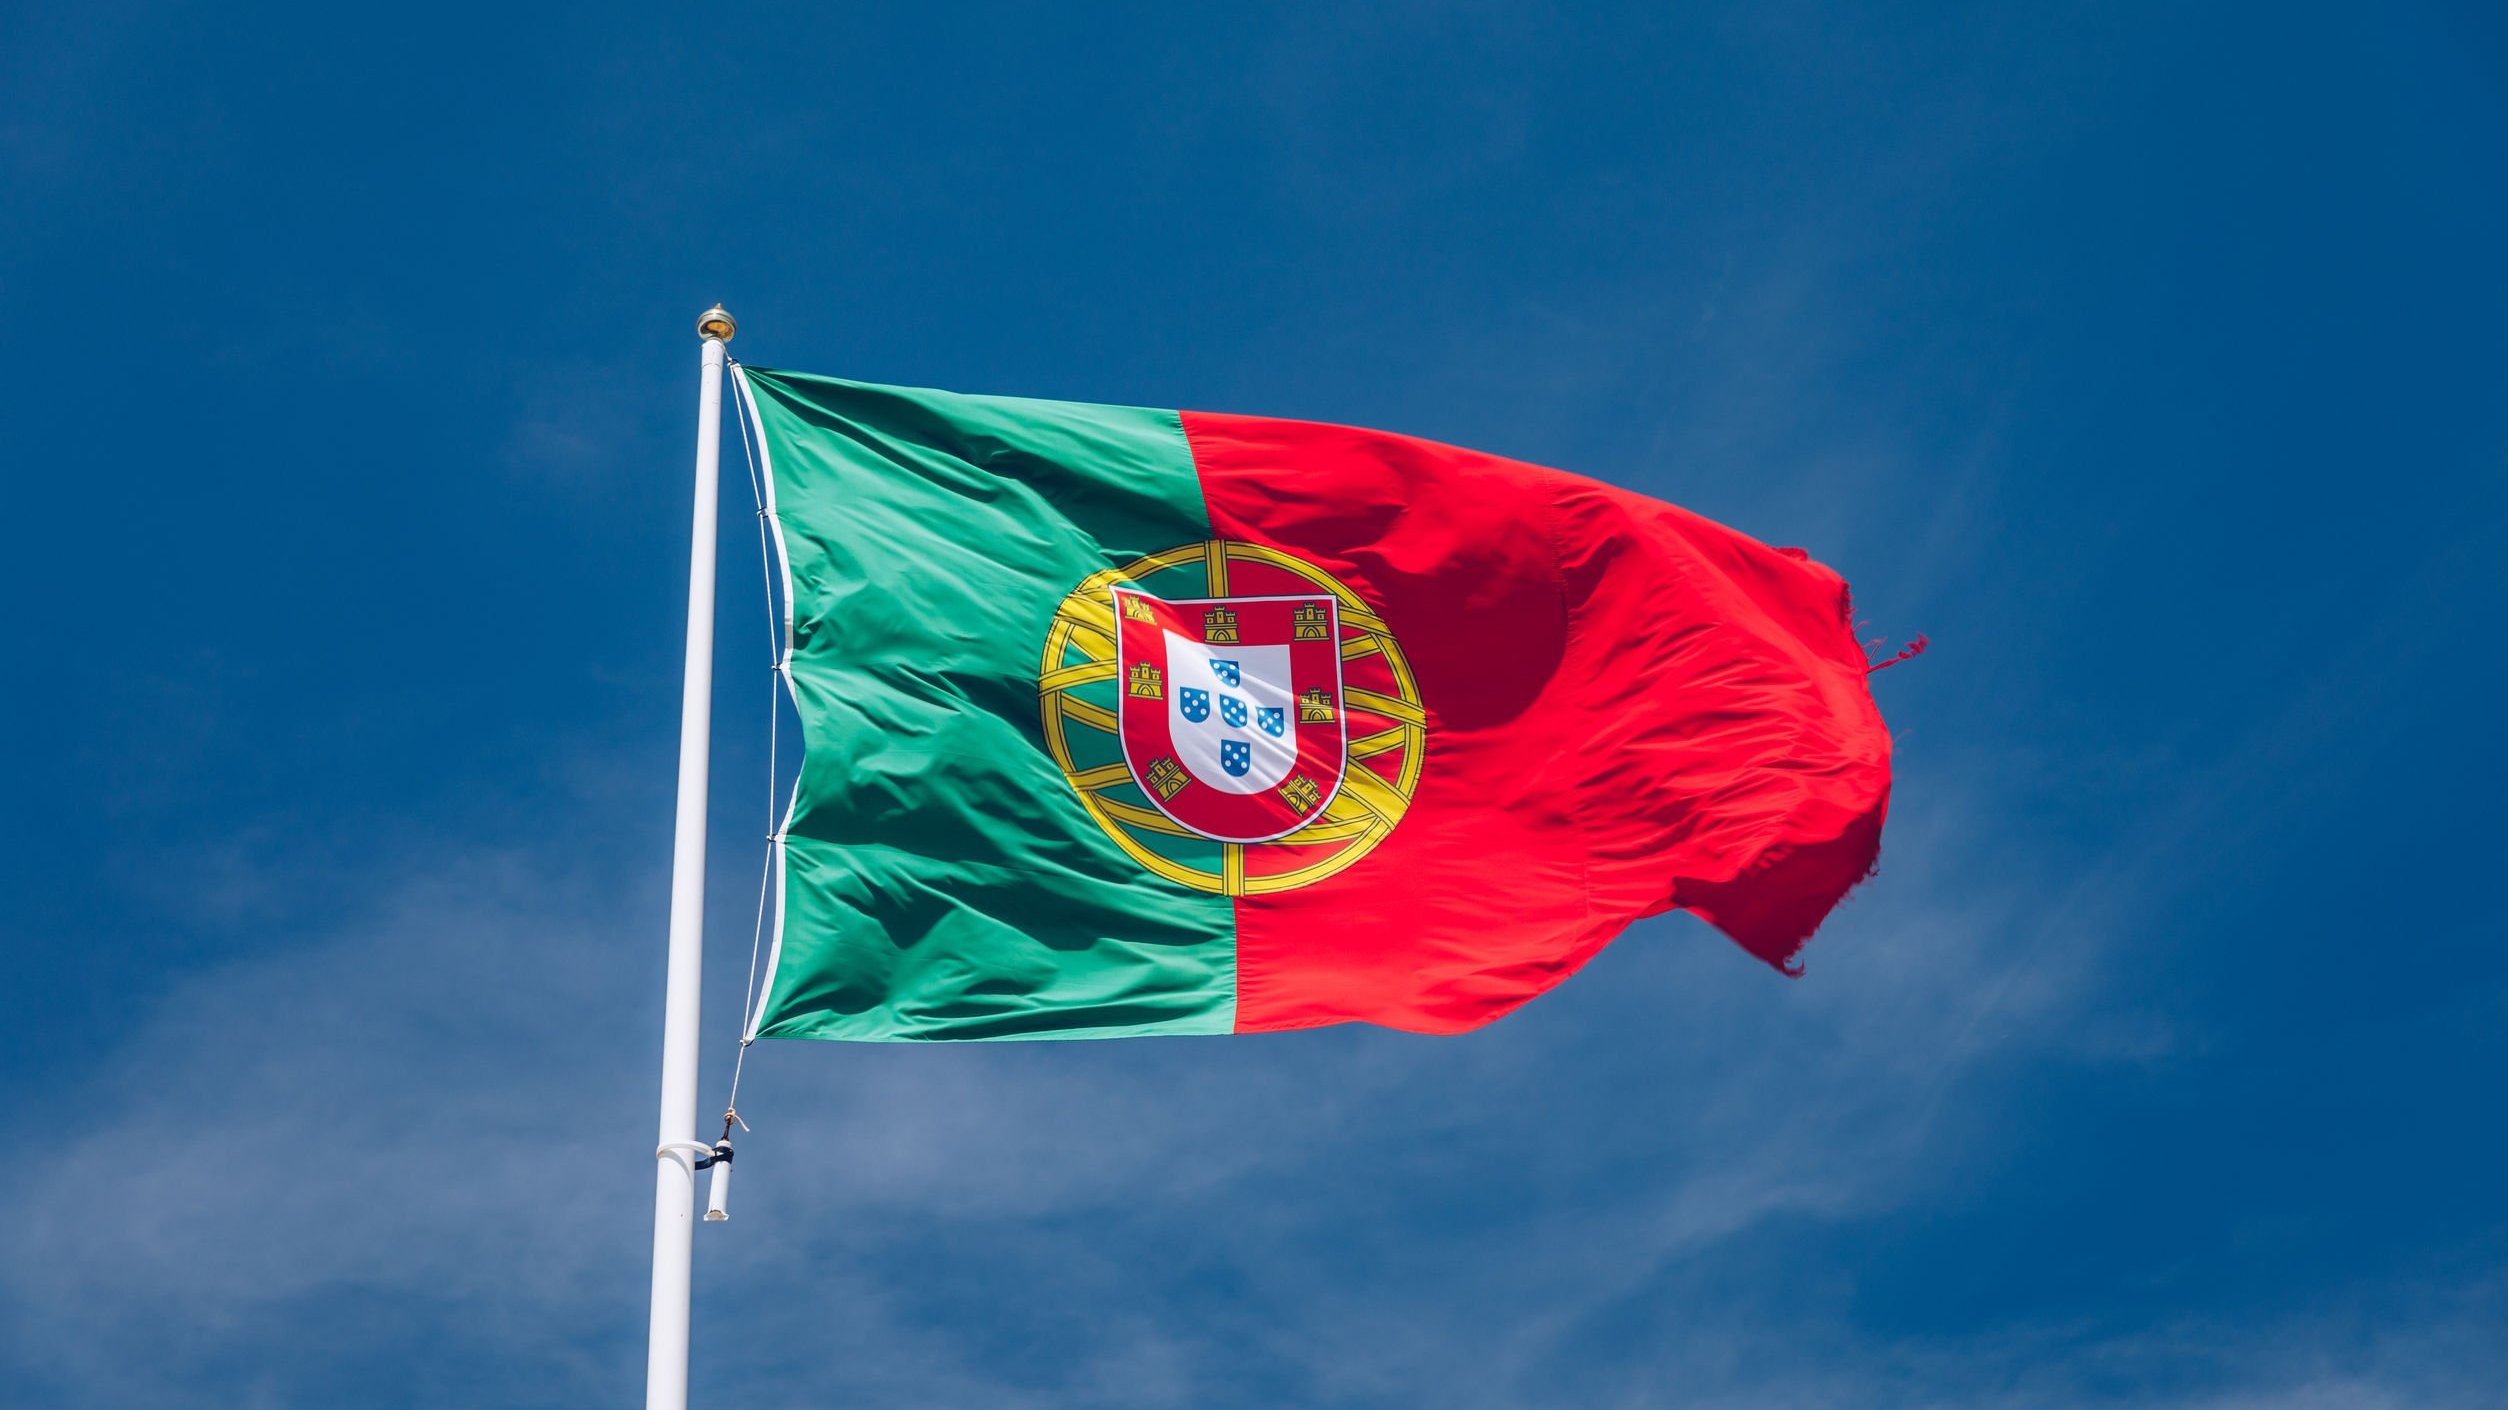 Bandeira de Portugal.